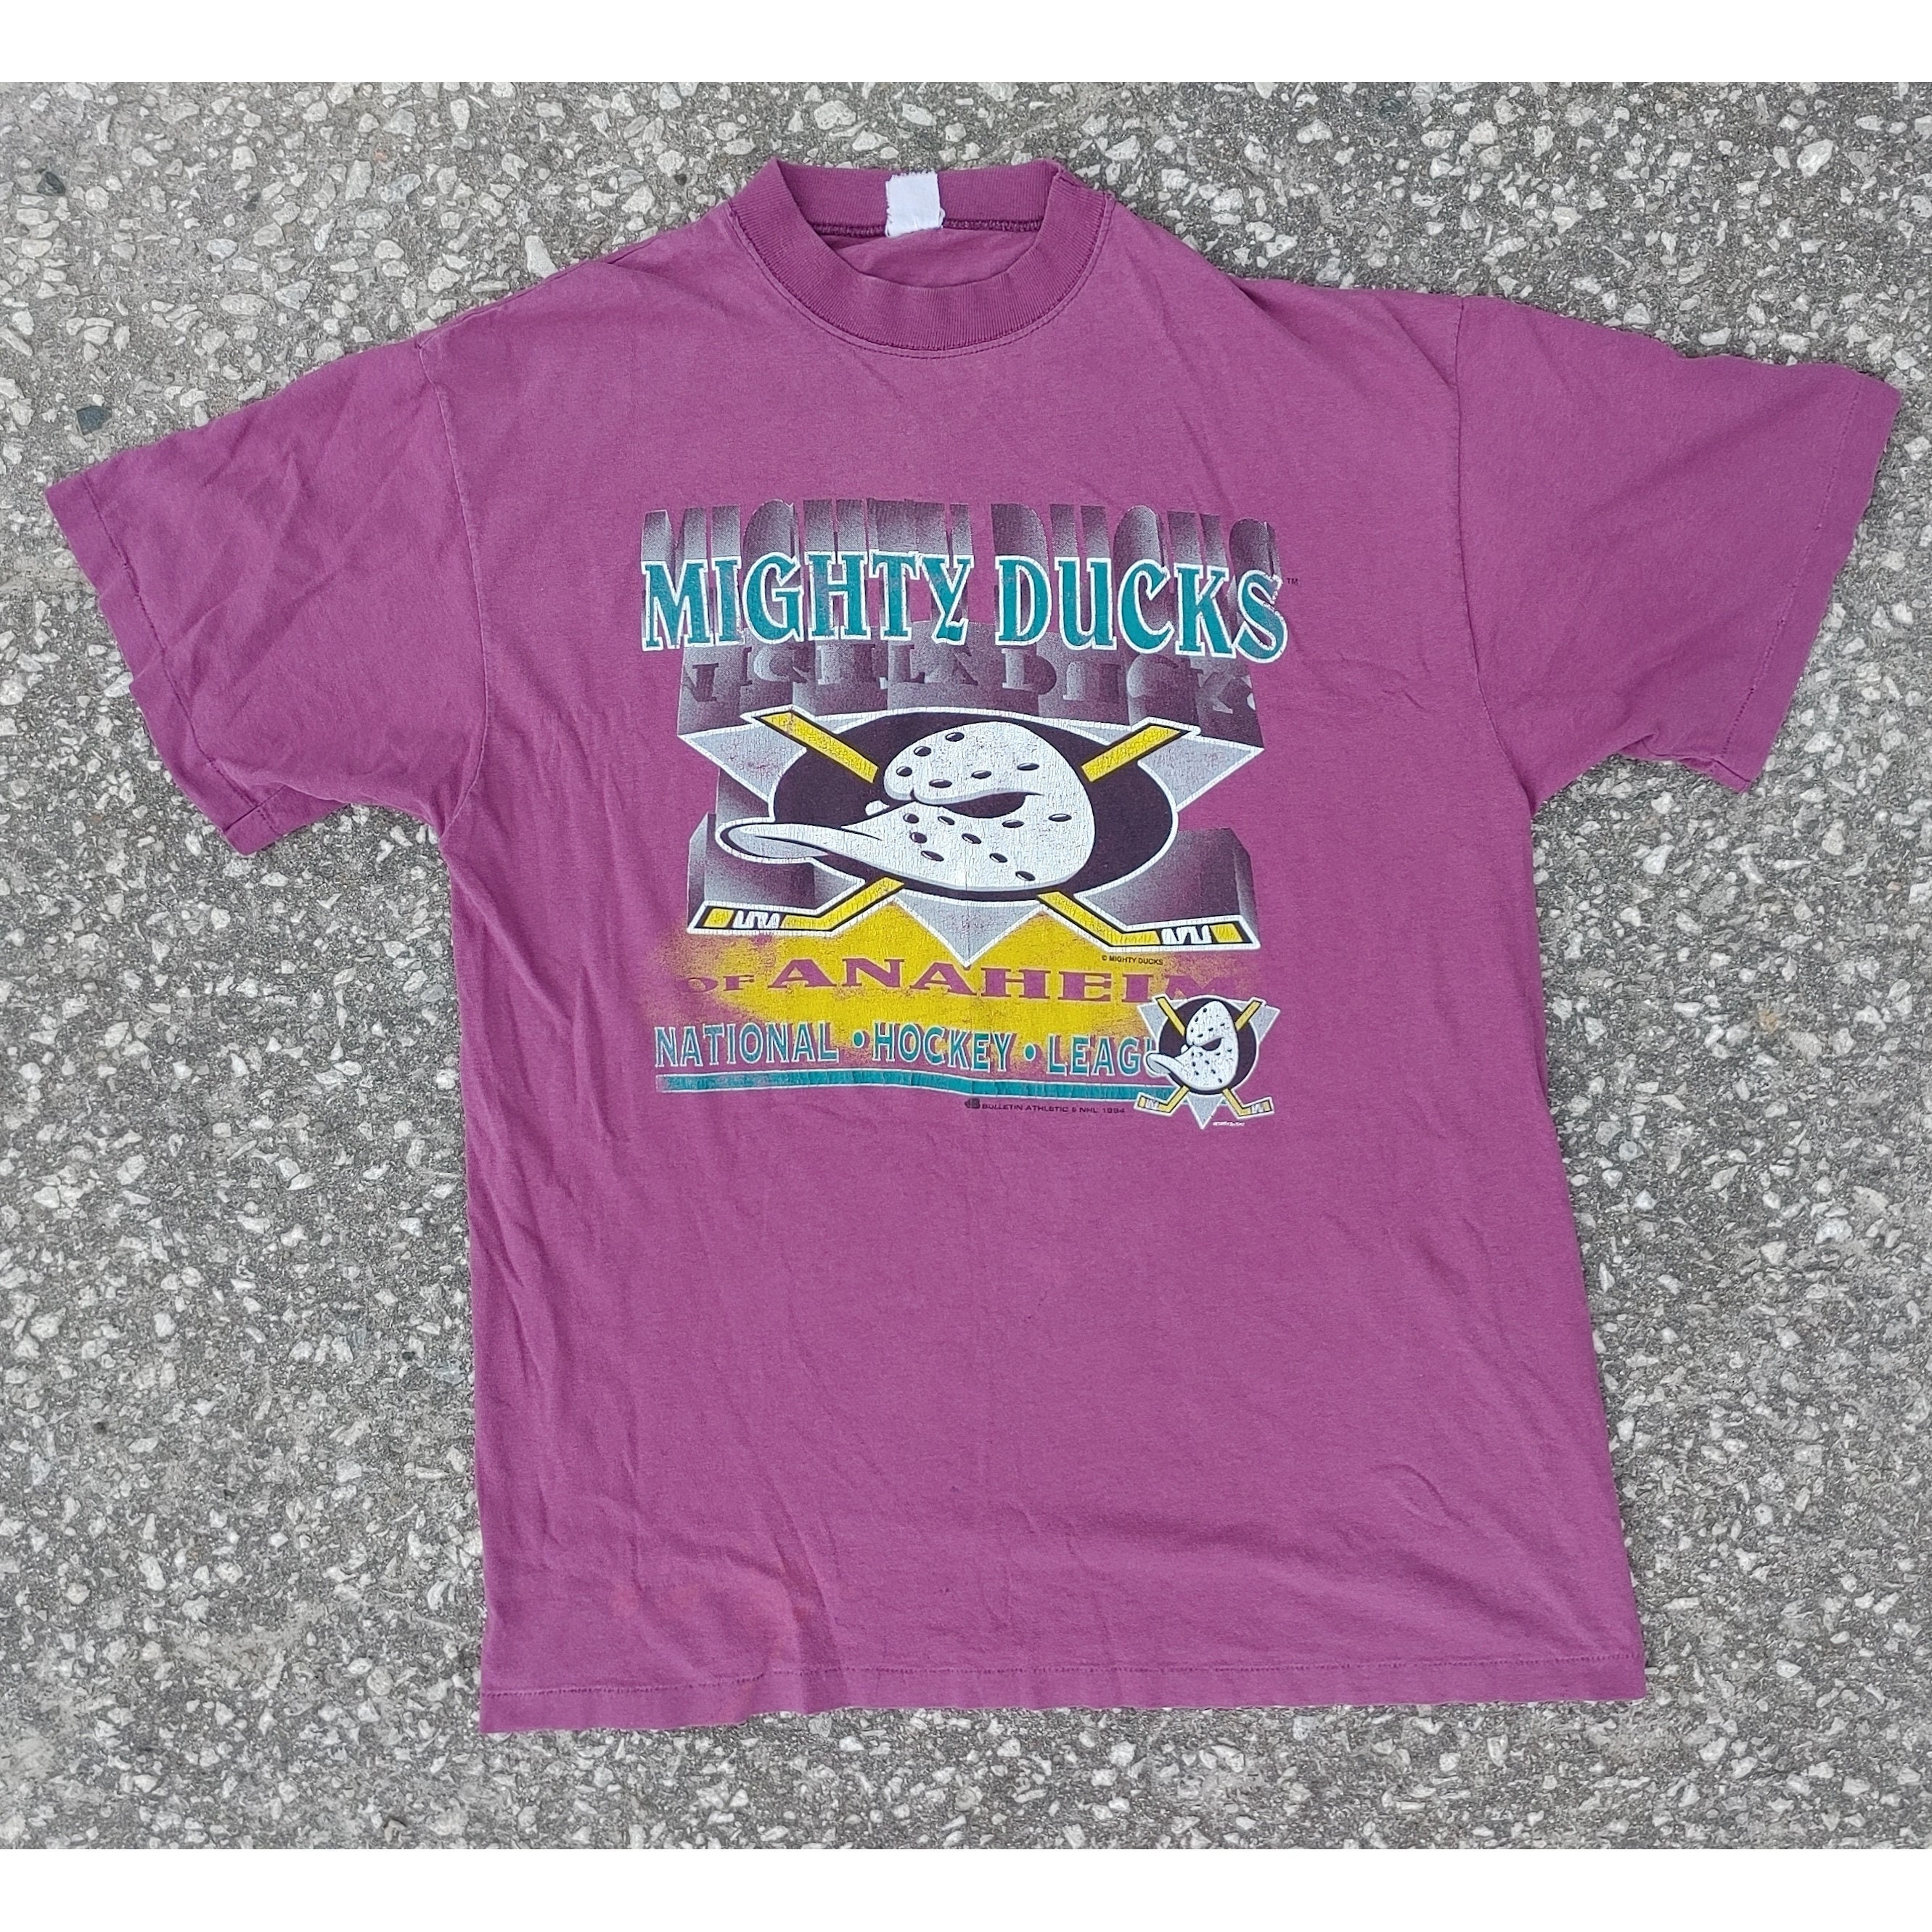 1994 Anaheim Mighty Ducks T-shirt Vintage 1990s Gildan Trench